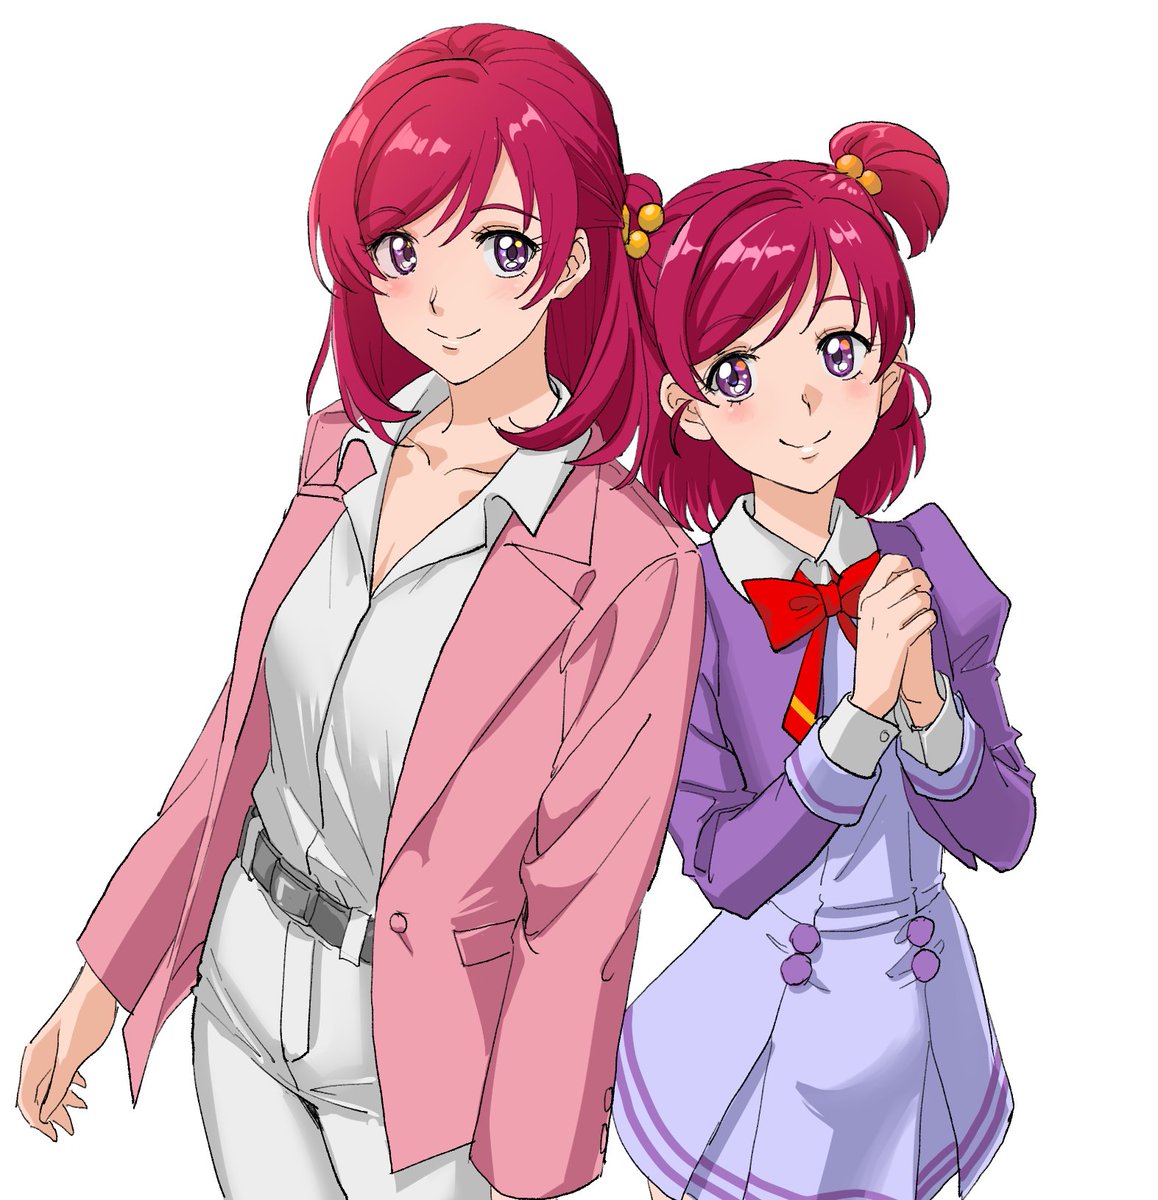 yumehara nozomi 2girls multiple girls school uniform smile purple eyes jacket pink jacket  illustration images